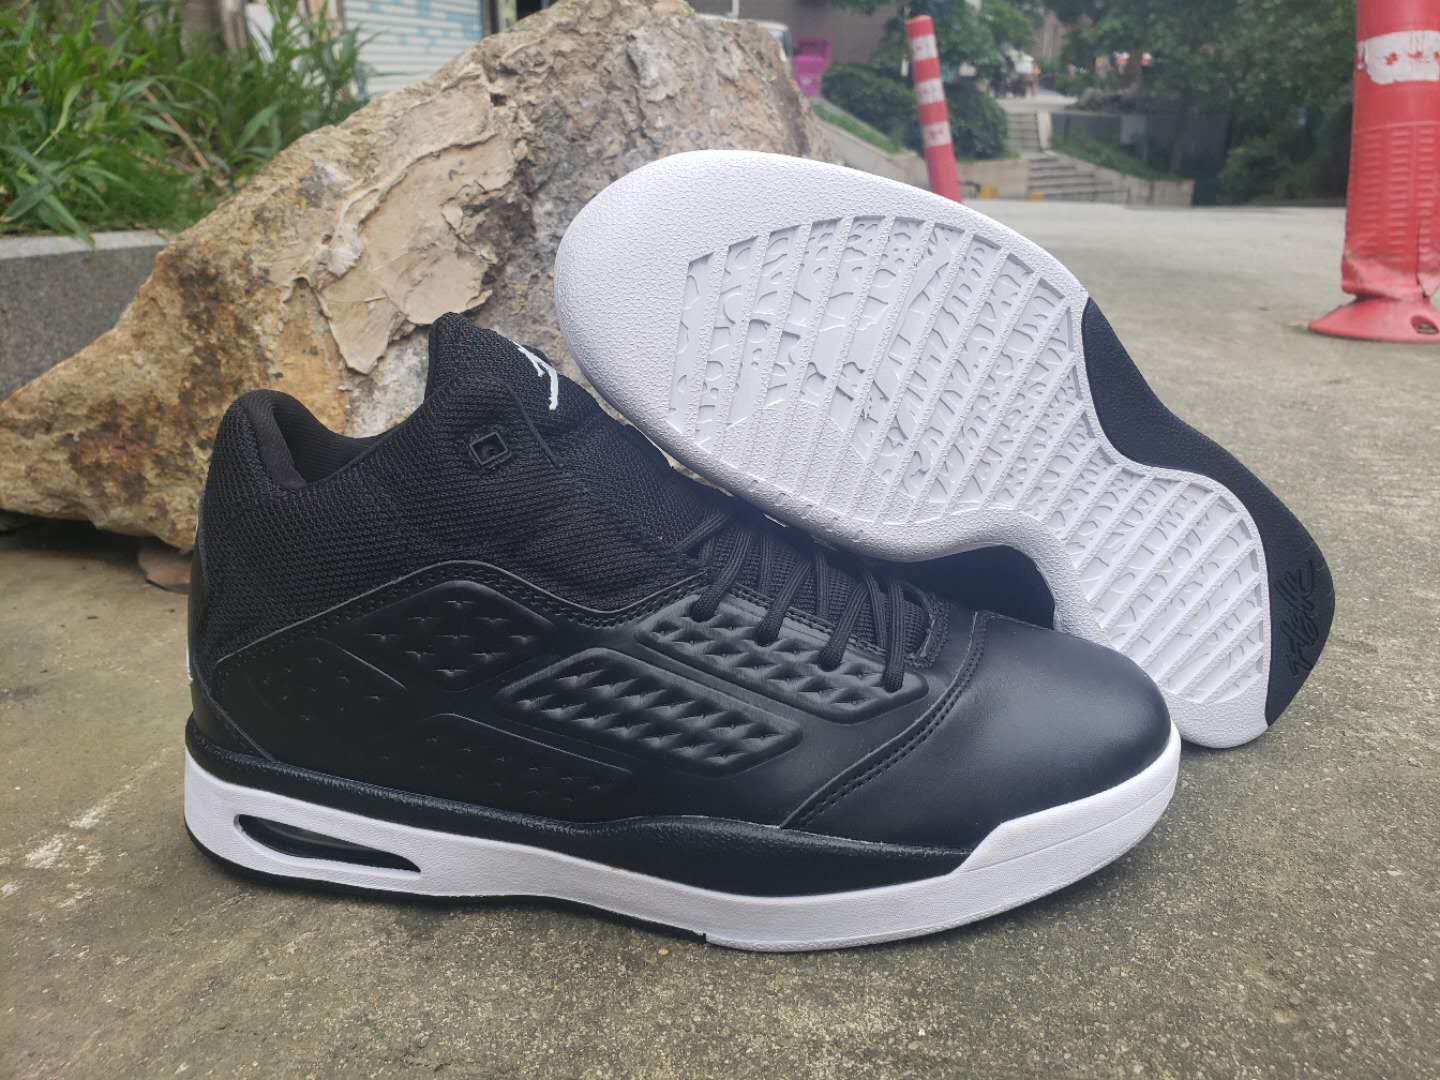 2019 Air Jordan New School Black White Shoes